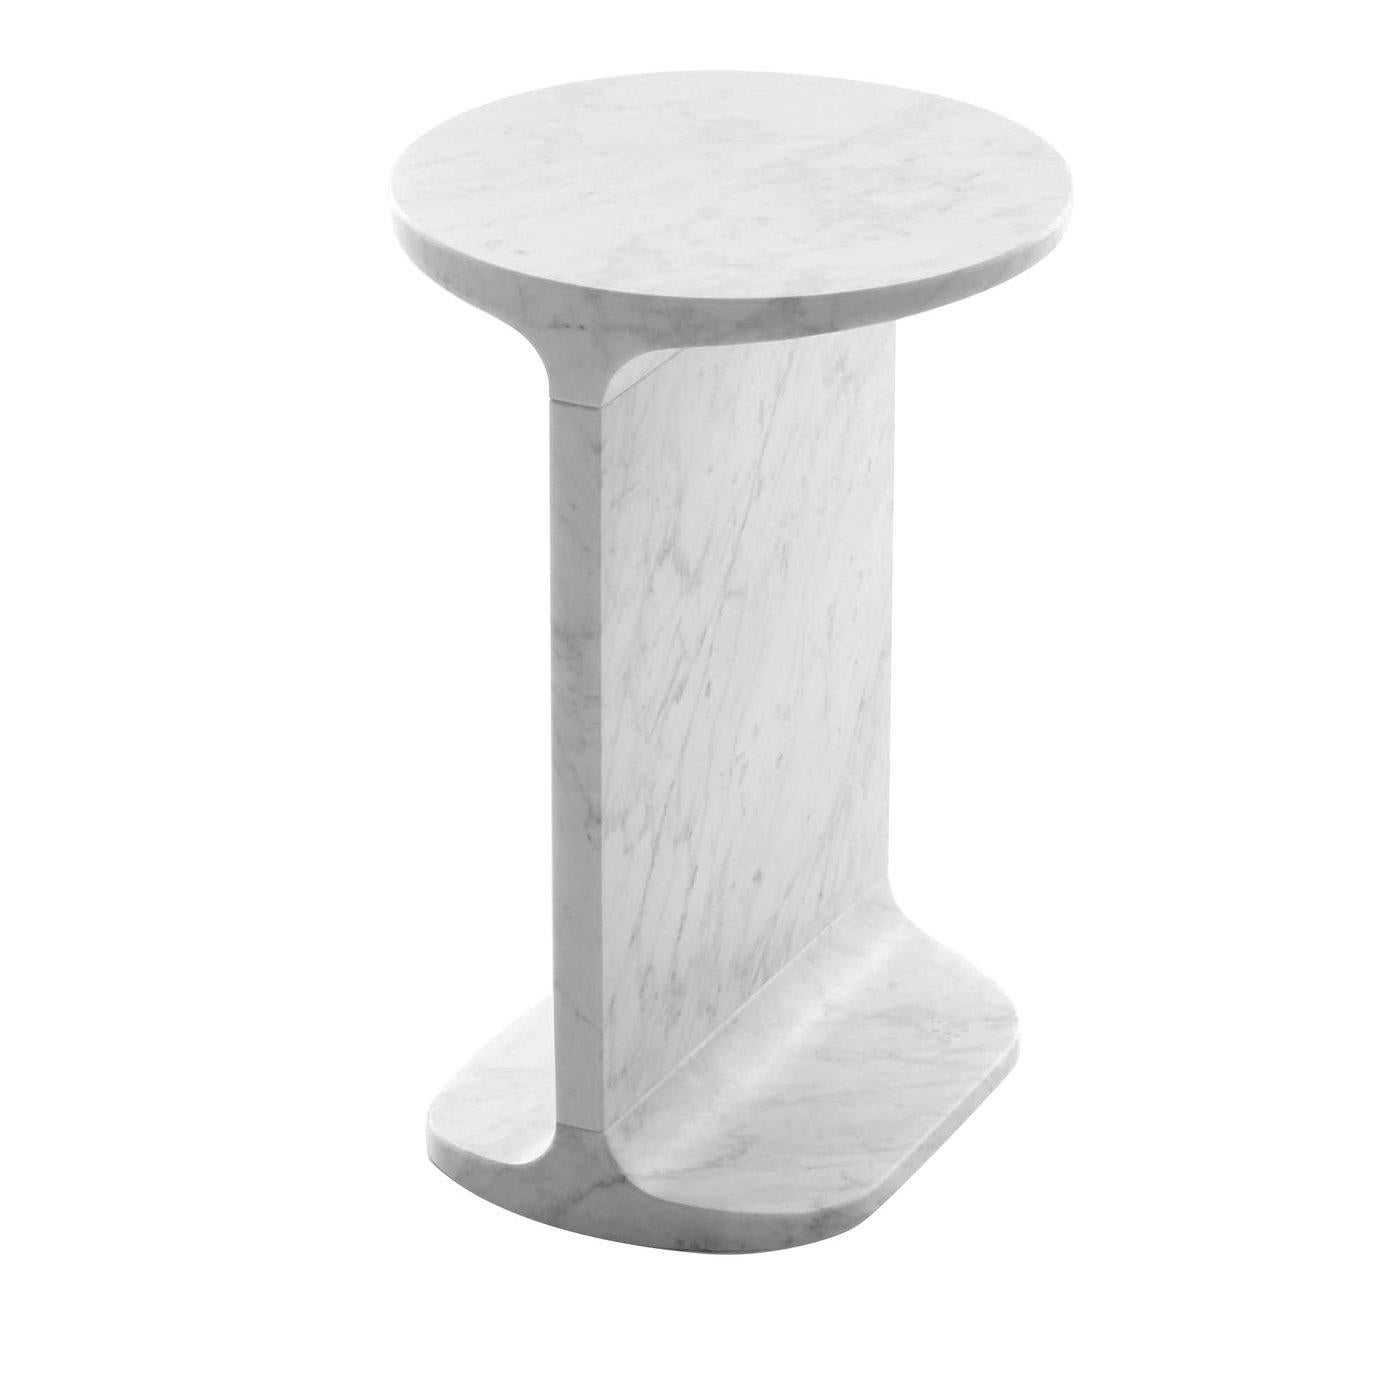 Italian White Ipe Tondo Side Table, Design James Irvine, 2009